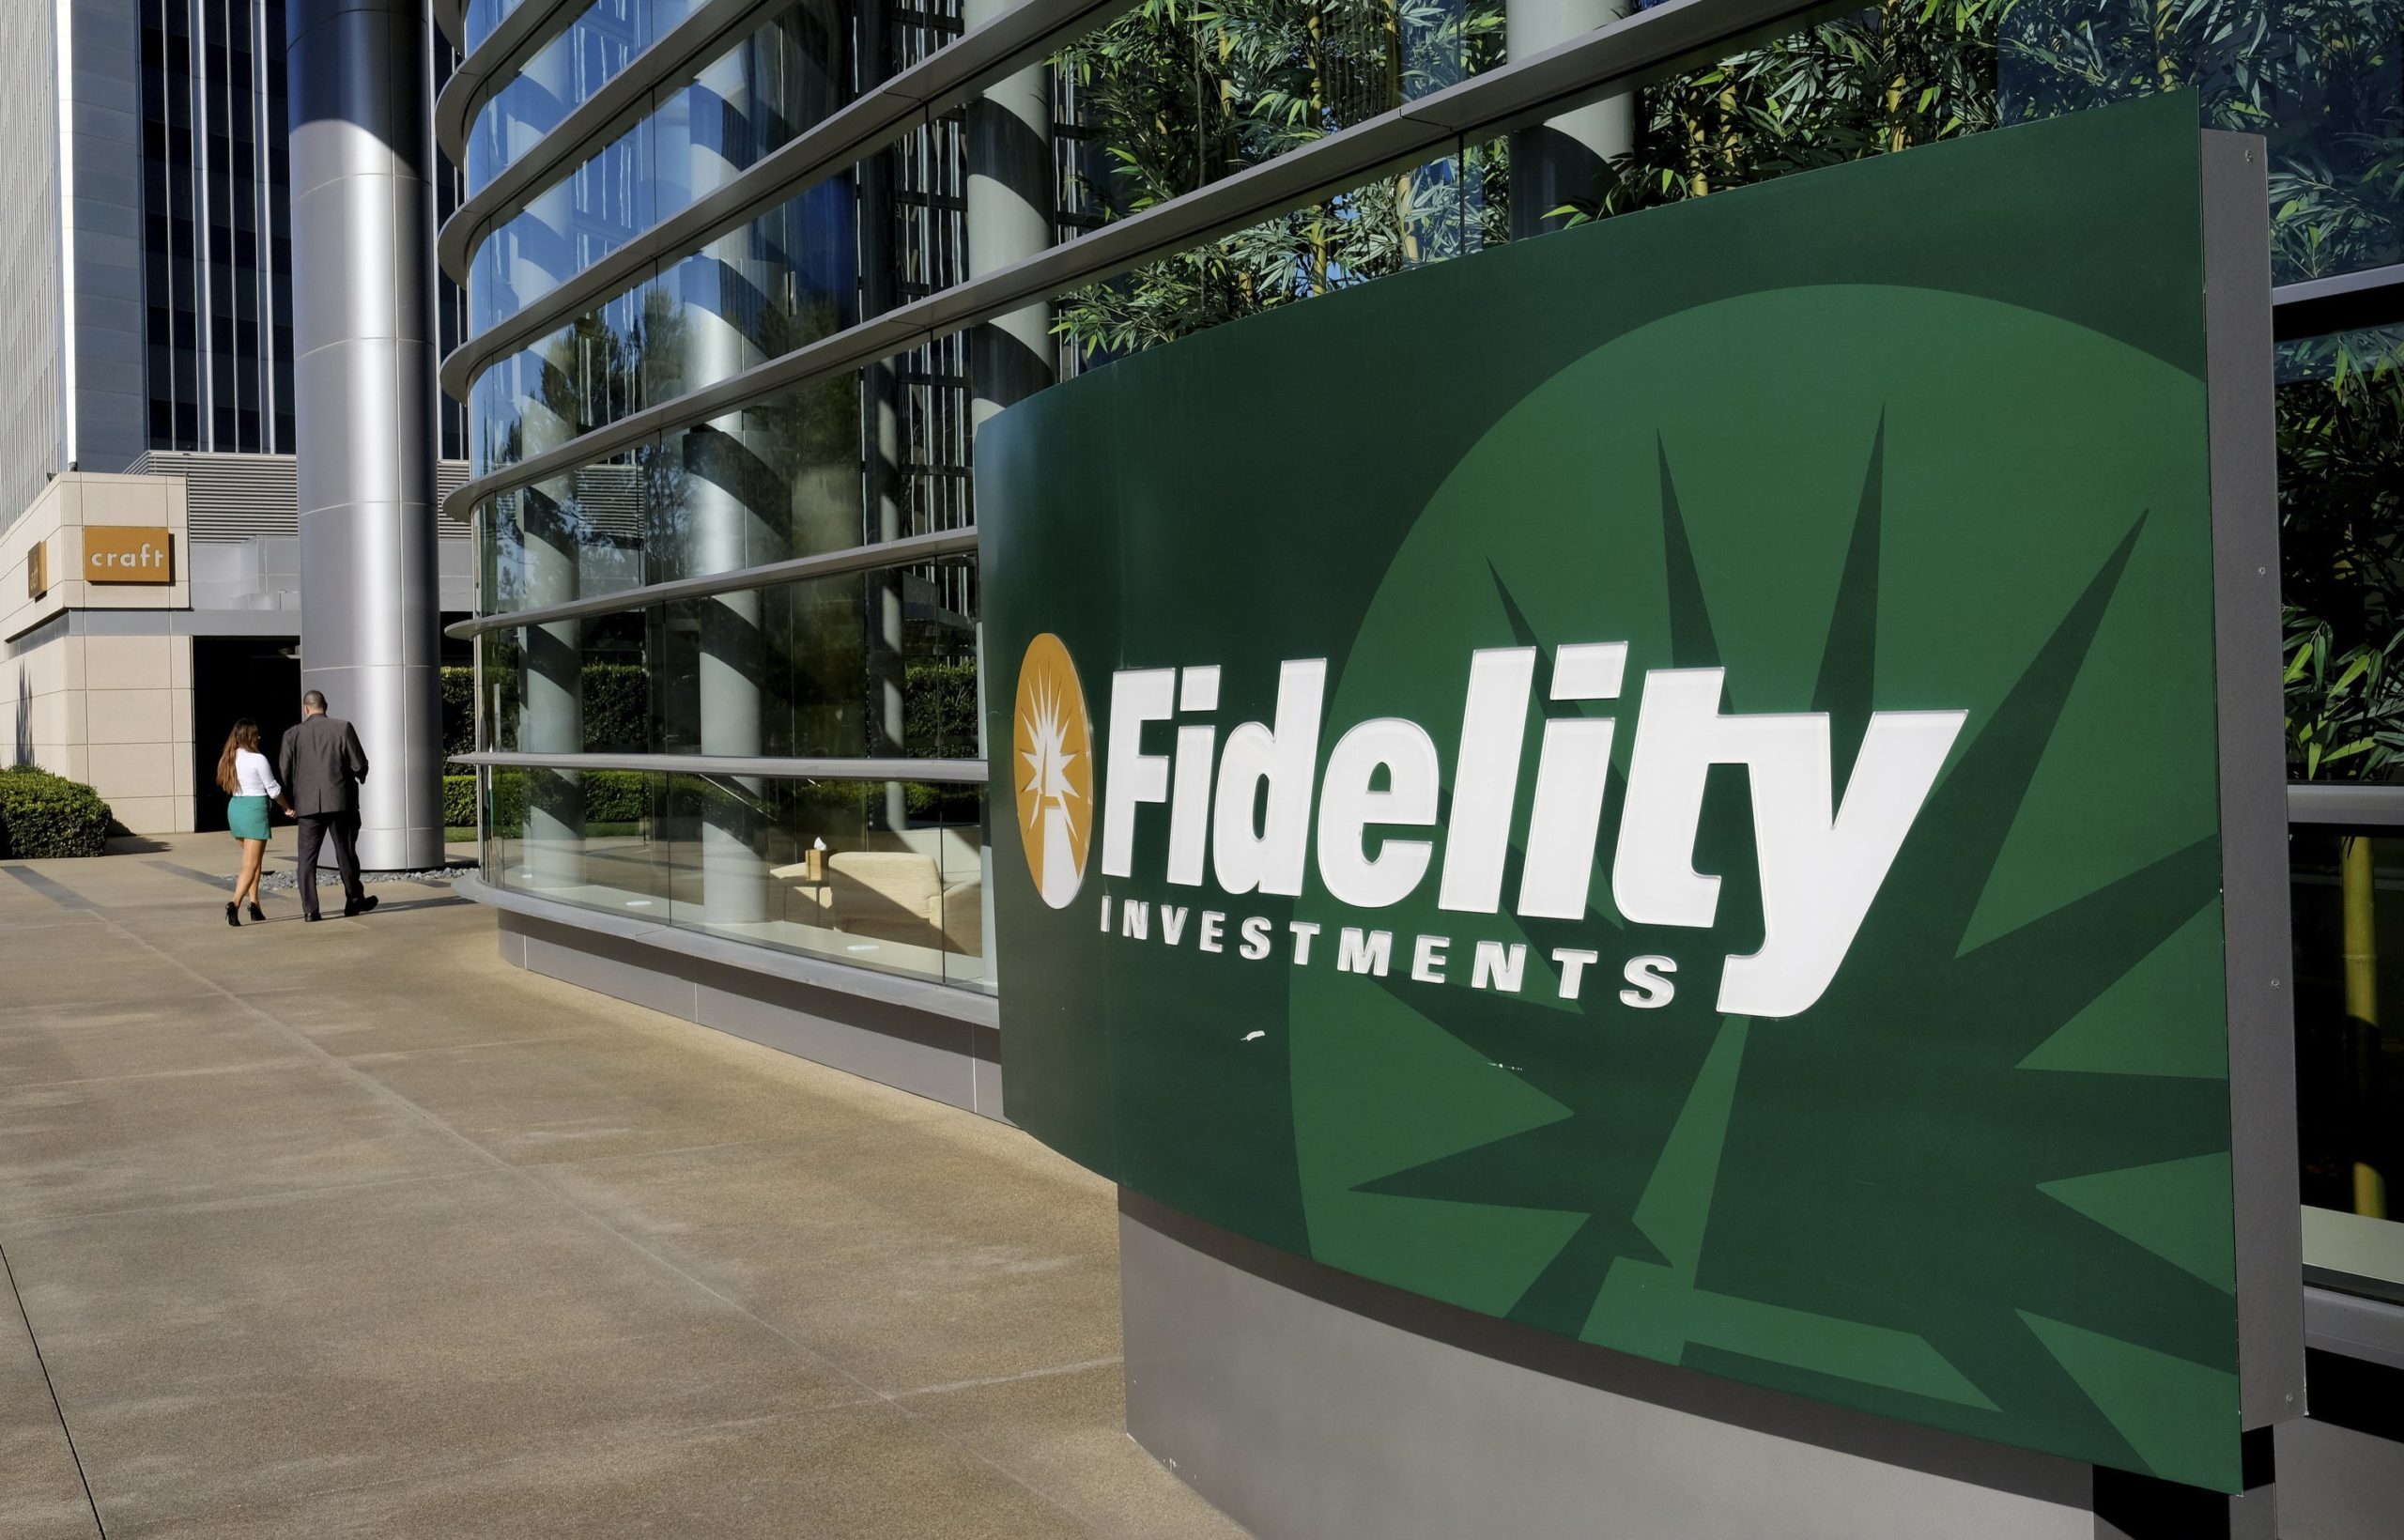 fidelity digital assets